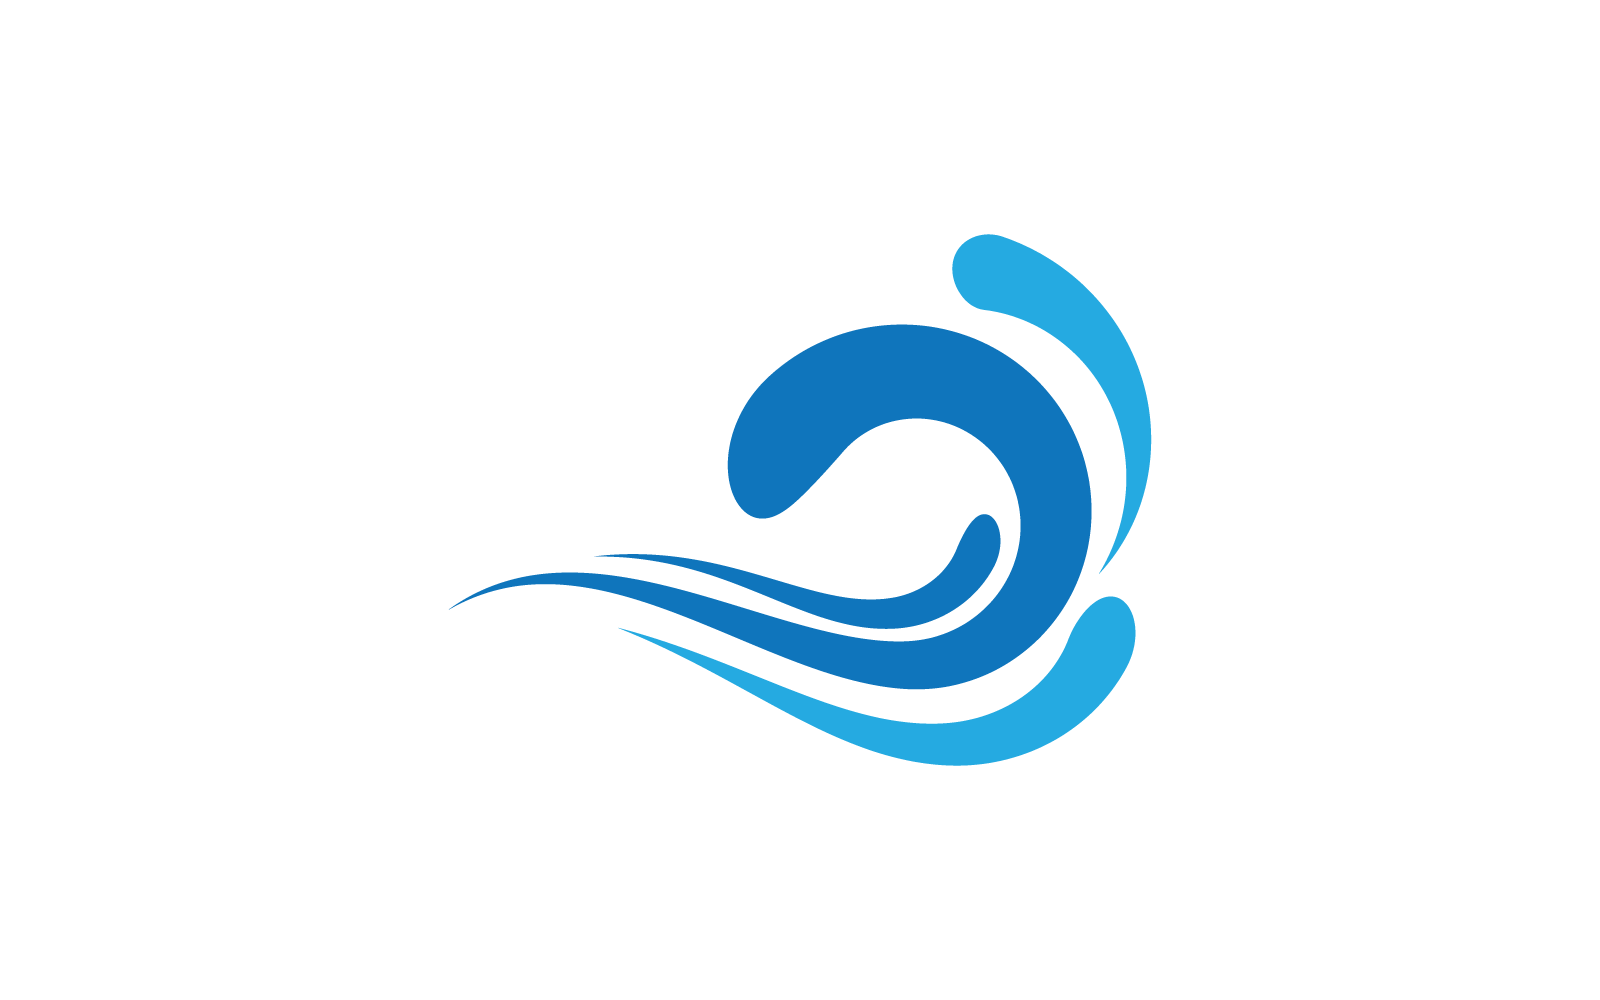 Water splash design vector illustration icon